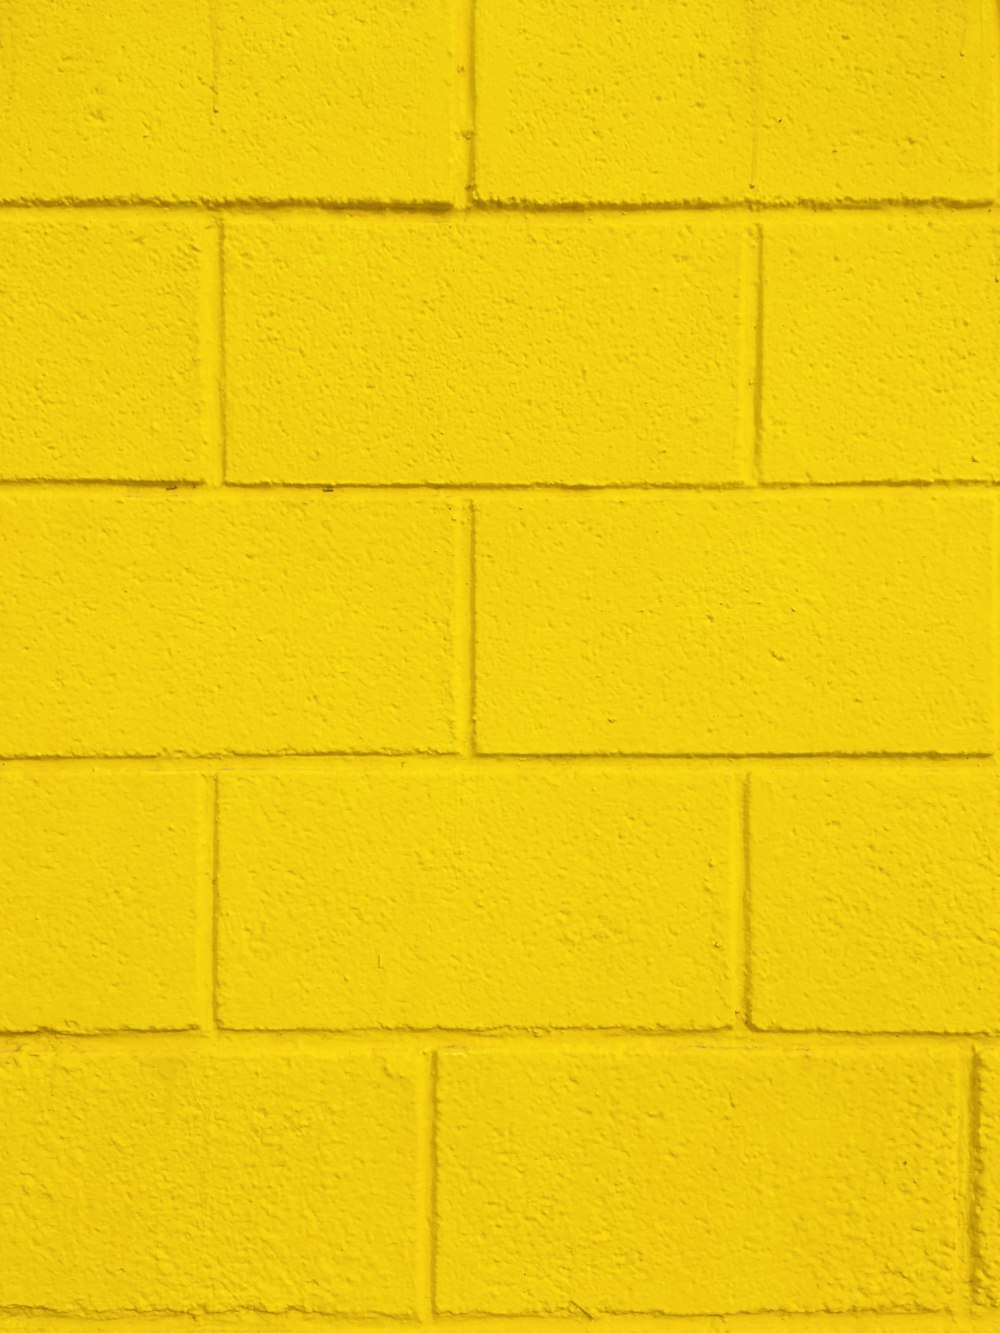 Details 100 wallpaper yellow background